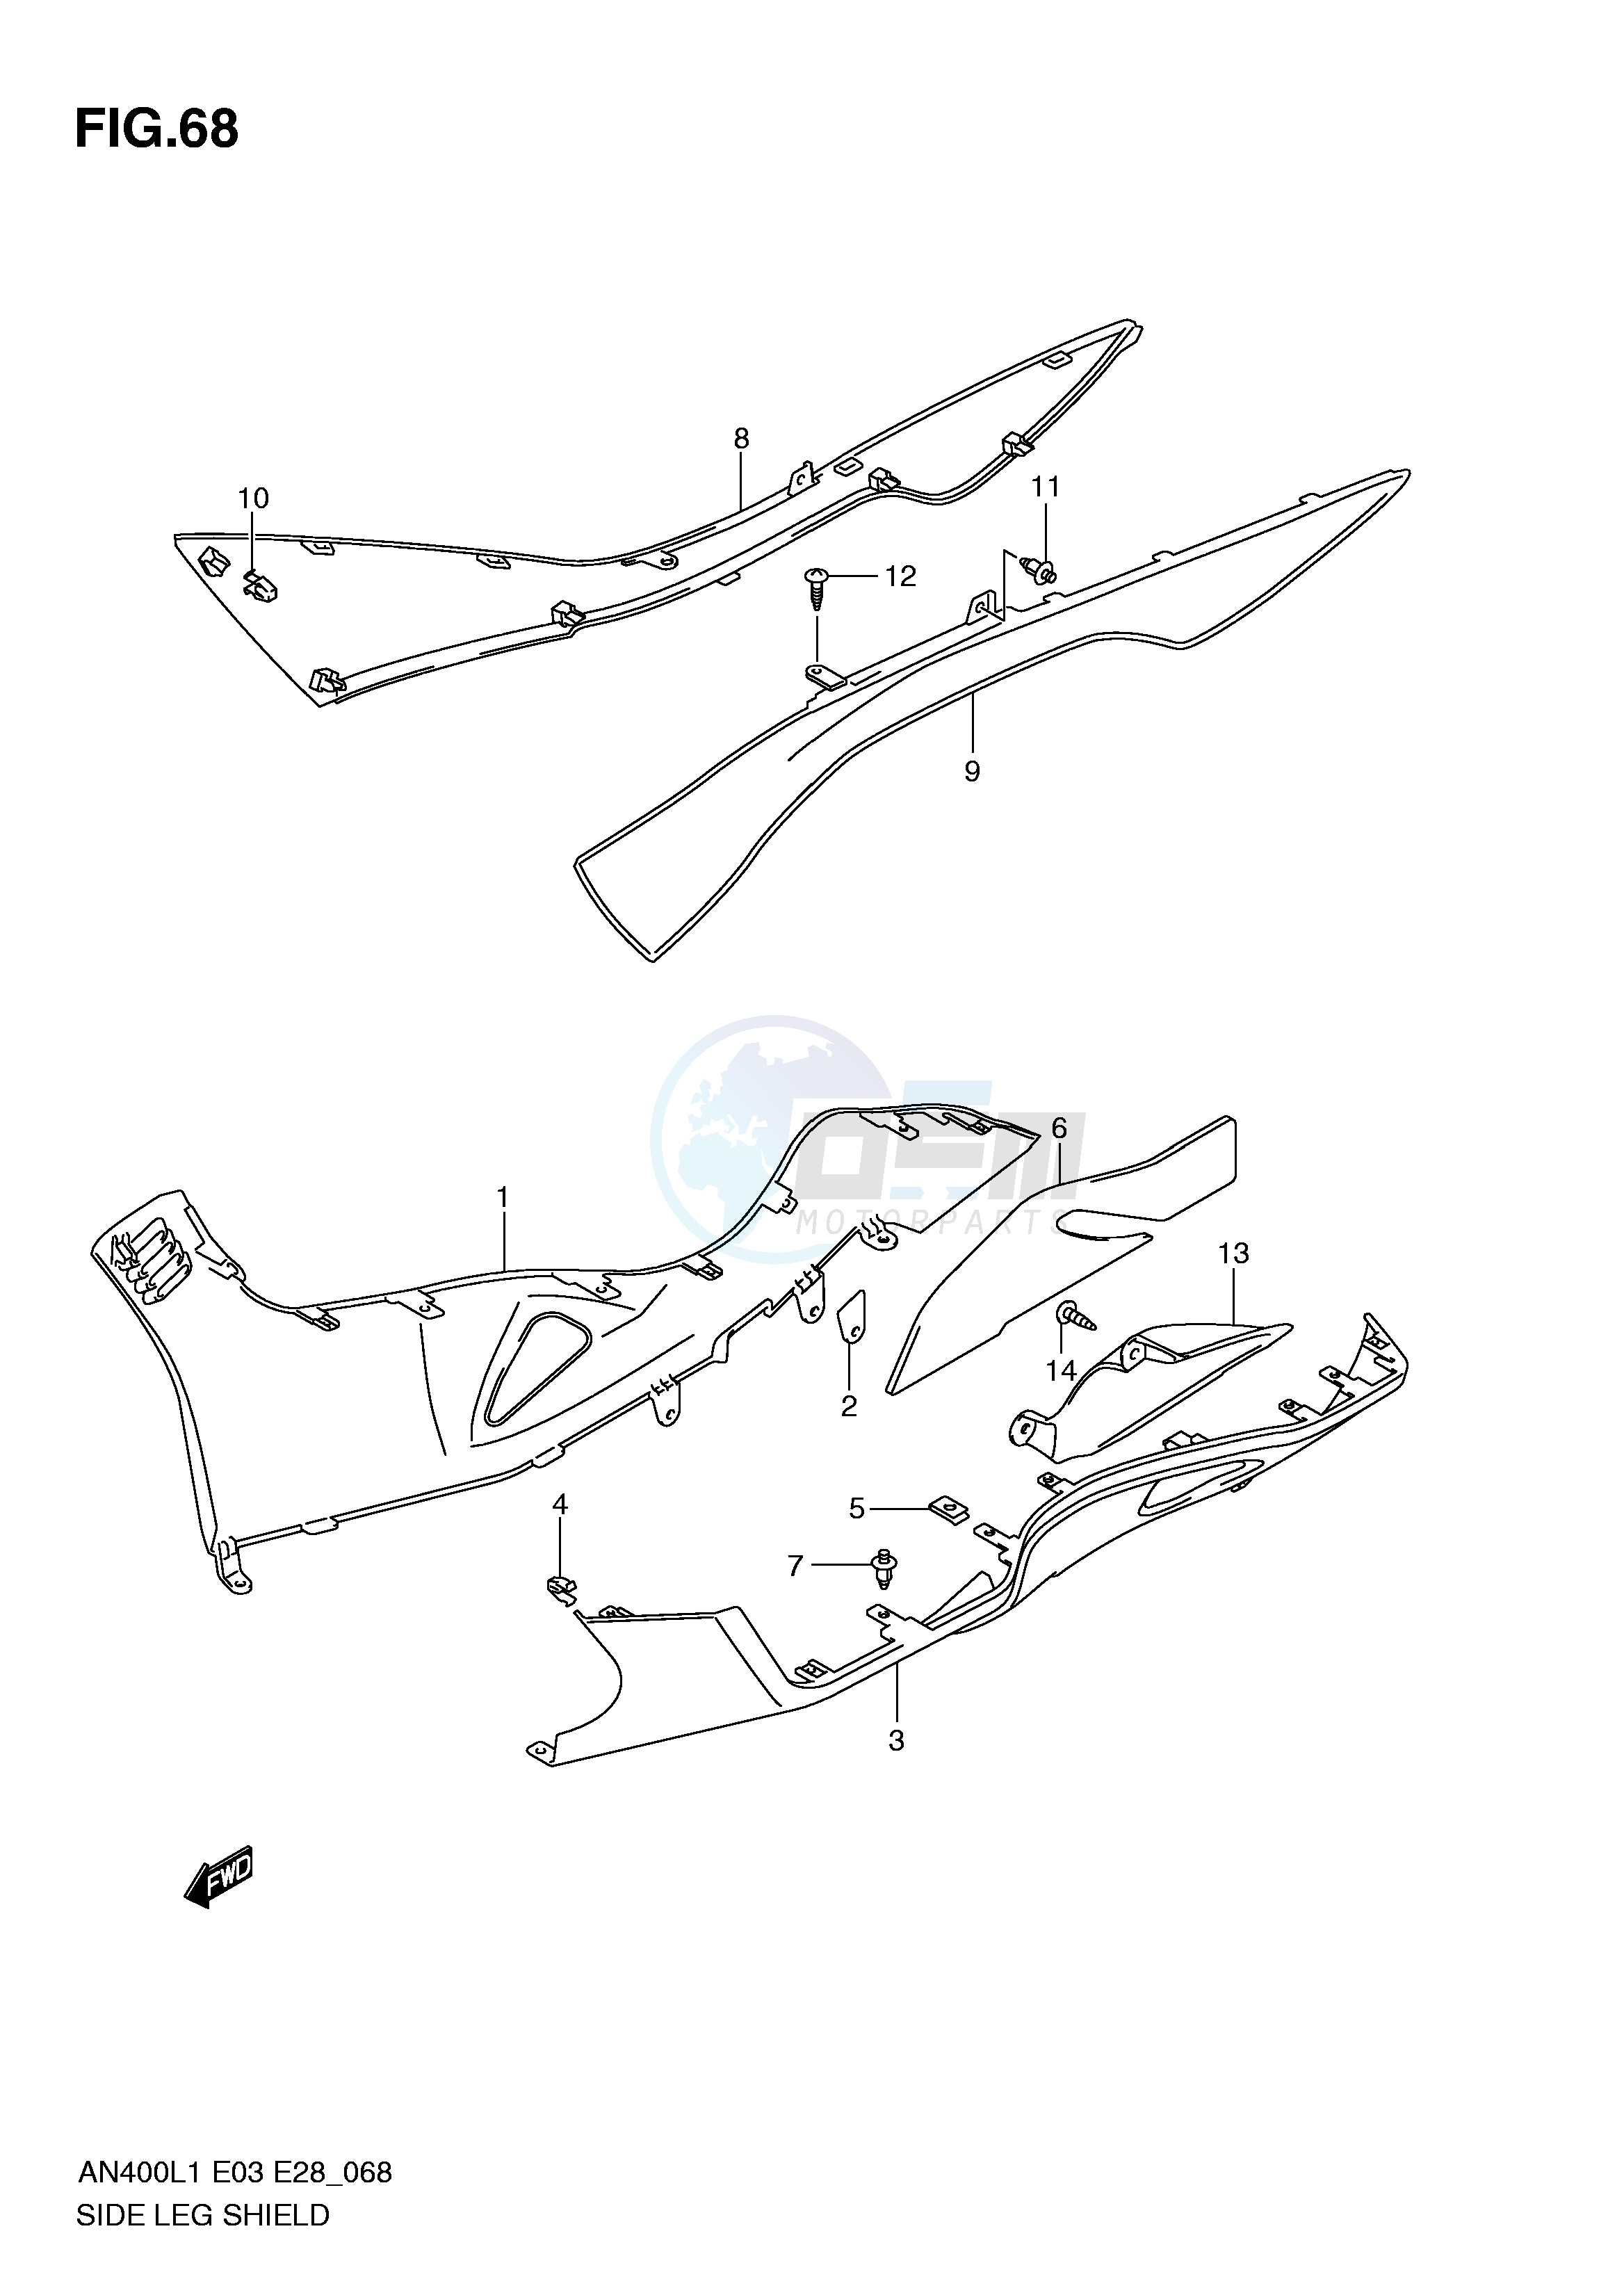 SIDE LEG SHIELD (AN400L1 E3) blueprint